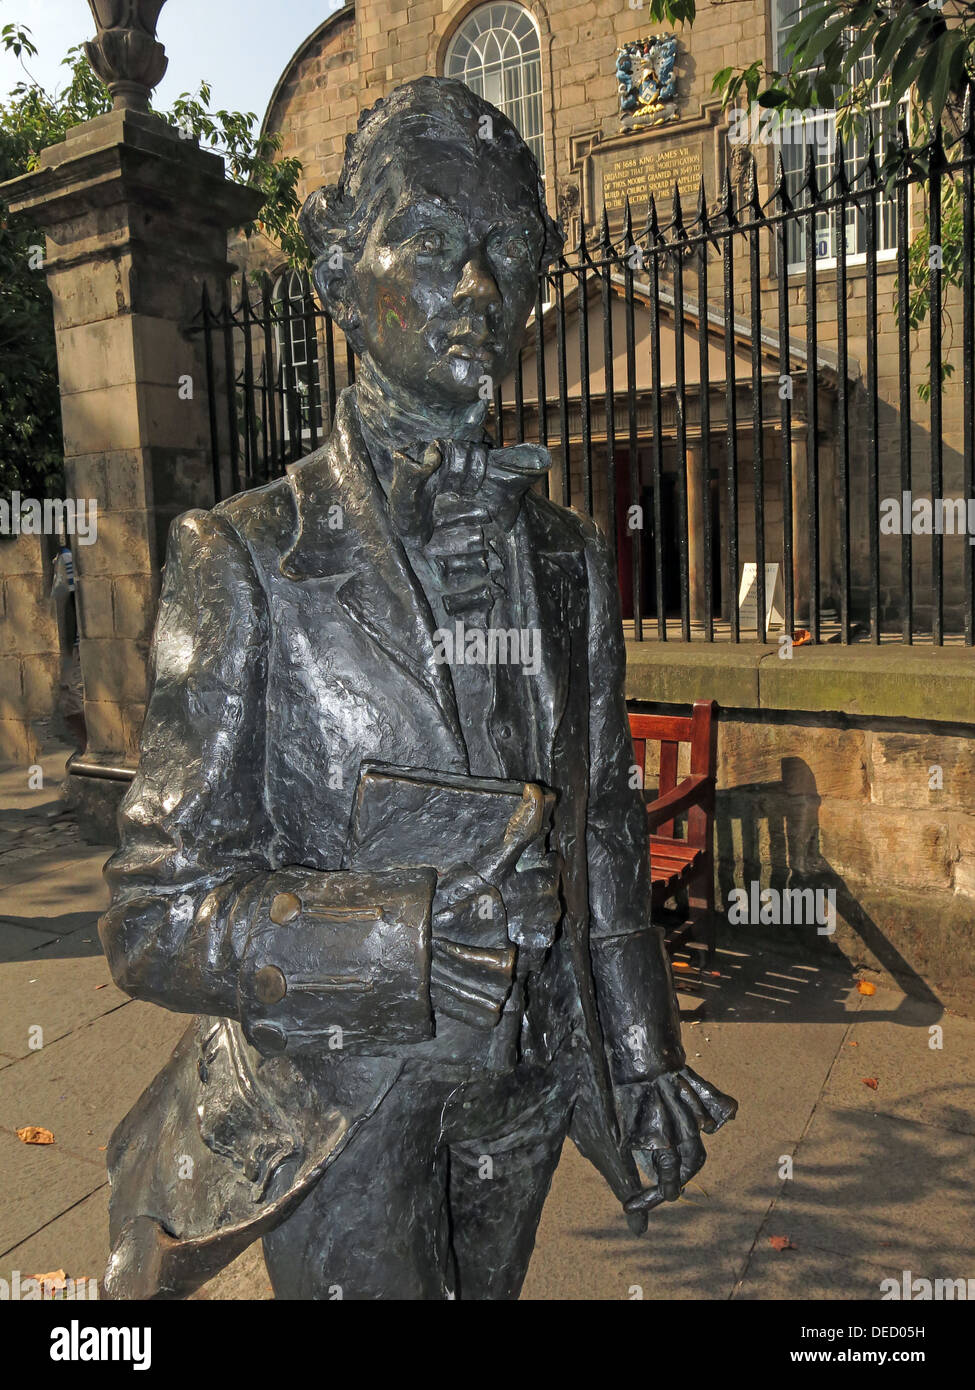 Robert Fergusson Scots Dichter Bronze Statue von Canongate Edinburgh-Royal Mile. Stockfoto